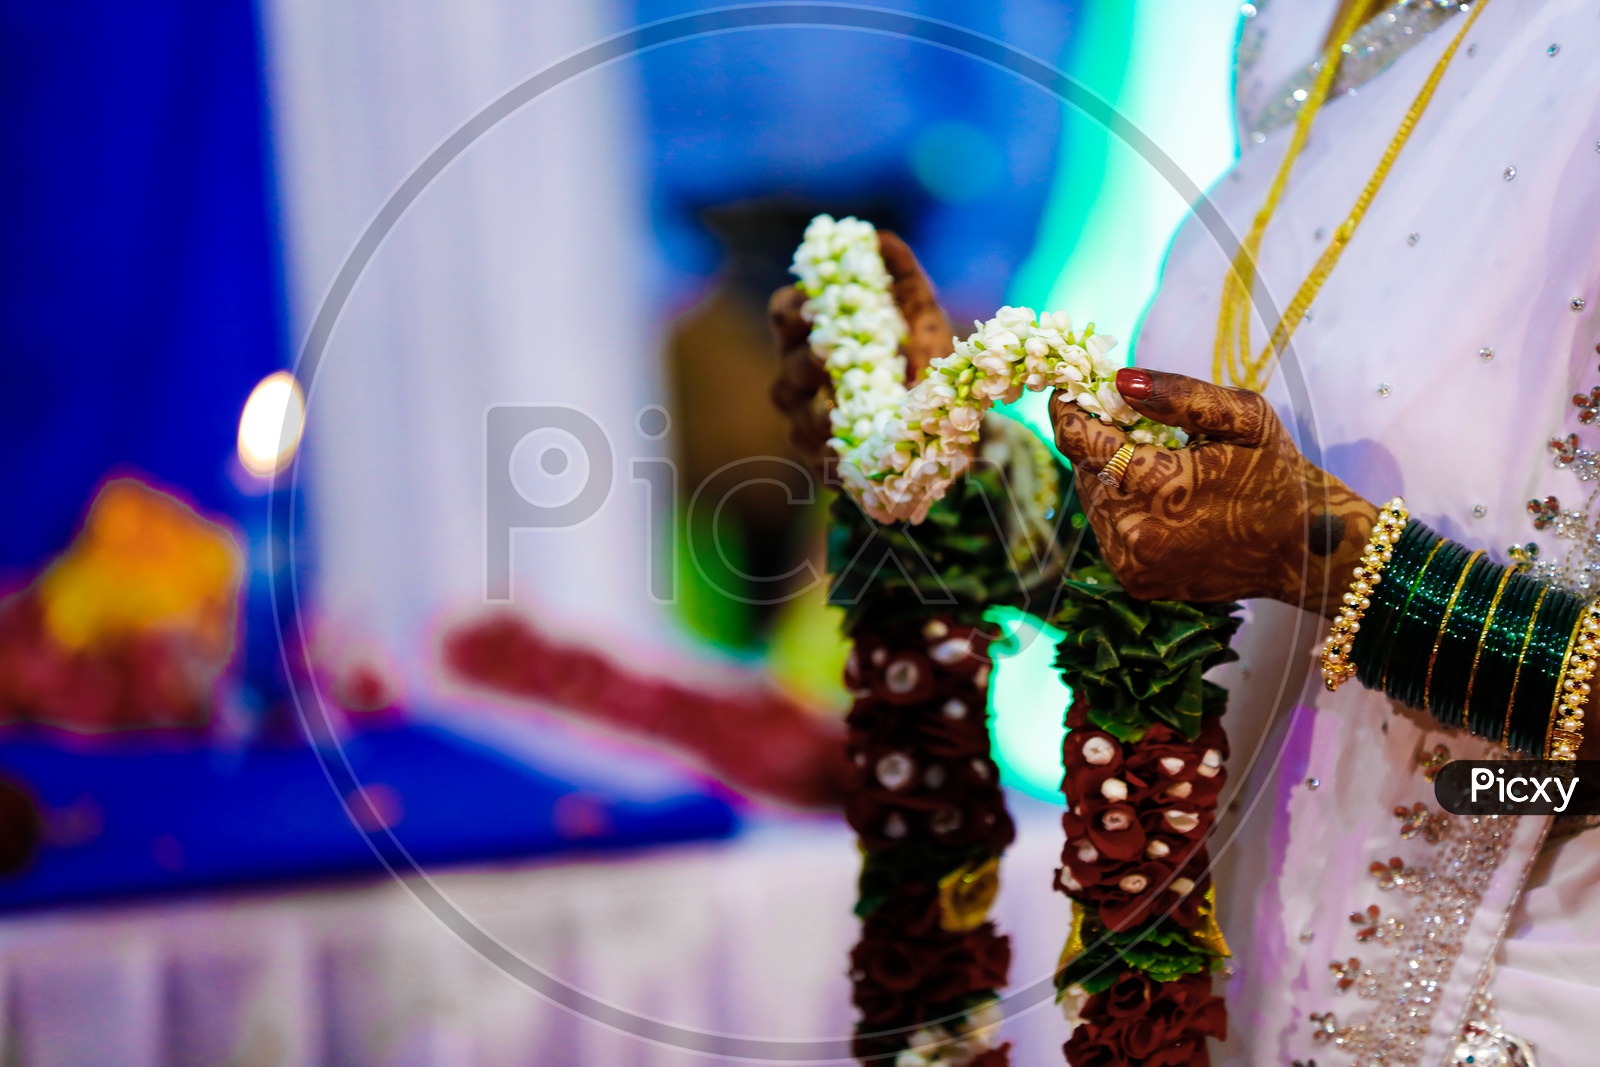 Hindu Wedding / South Indian Wedding / Wedding Rituals / South Indian Wedding Shots